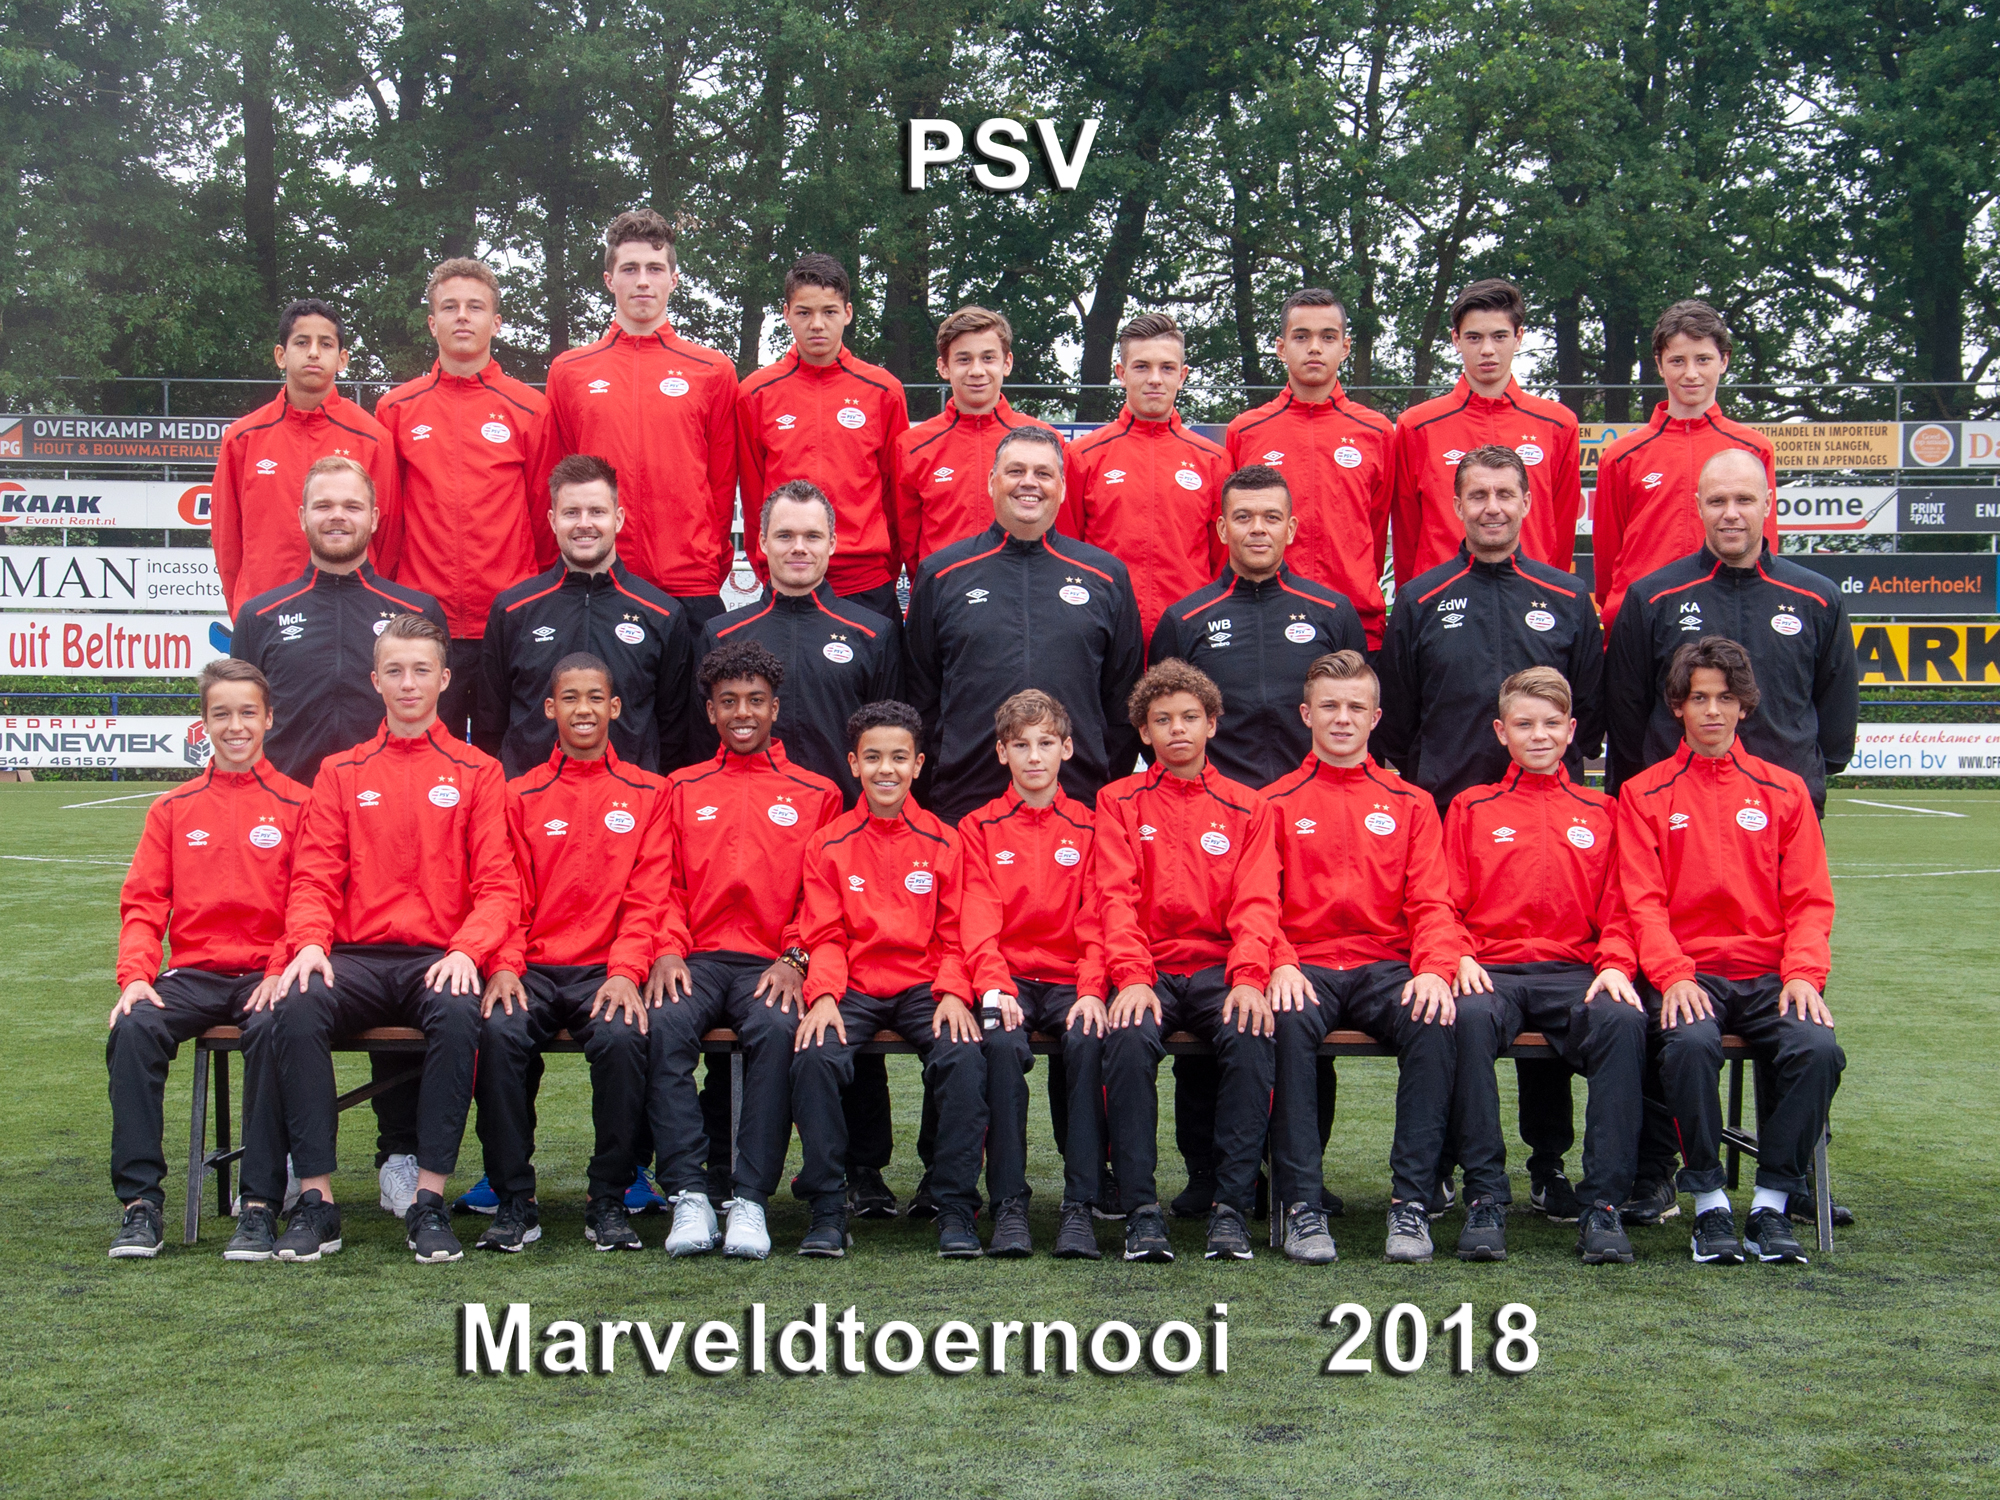 Marveld Tournament 2018 - PSV